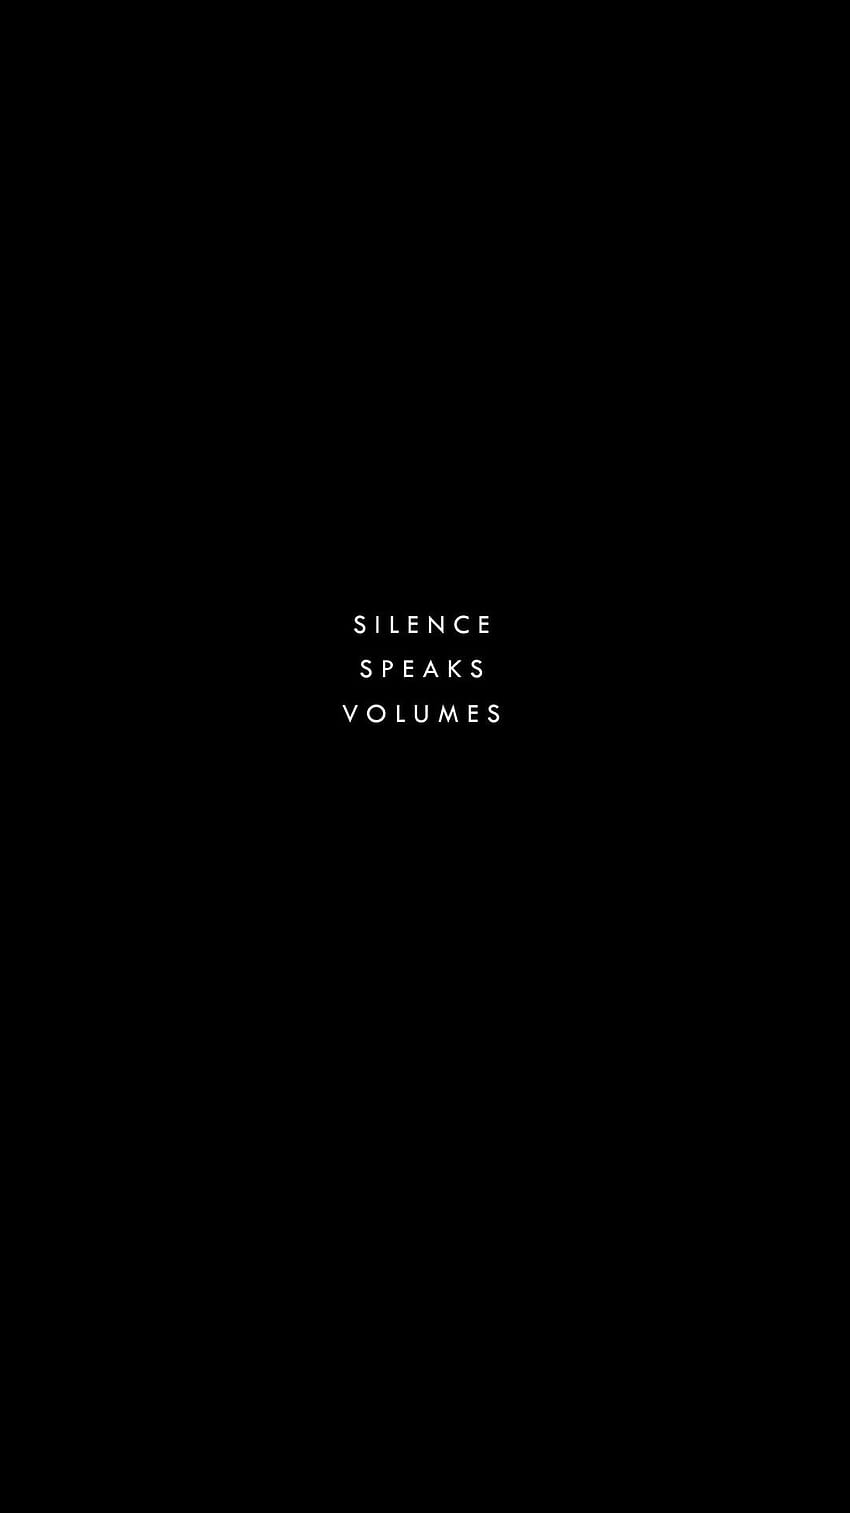 Silence speaks ボリューム リクエスト。 肯定的な引用、沈黙の引用、言葉の引用、静かにしてください HD電話の壁紙